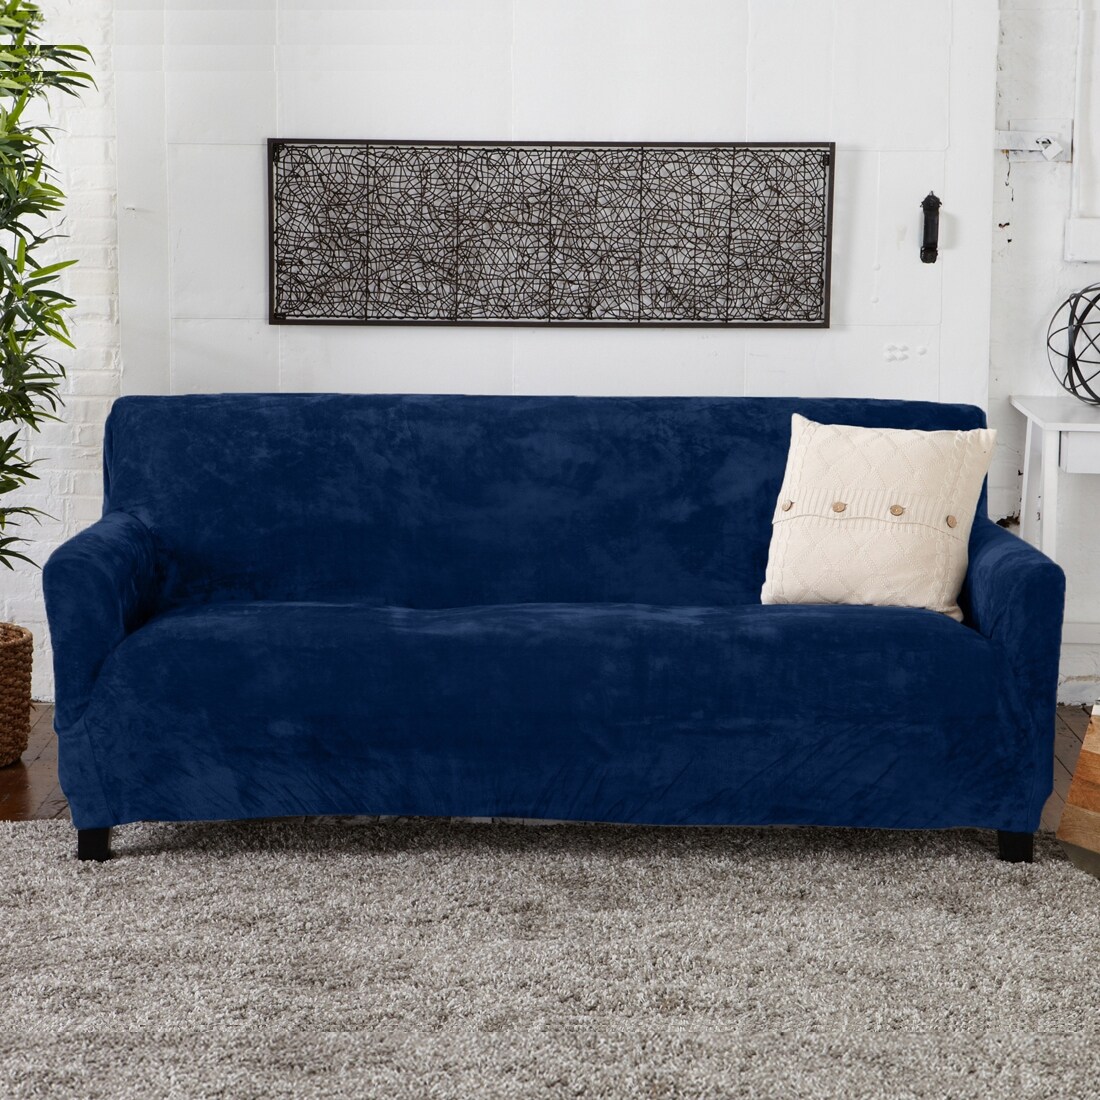 Plush Velvet Elastic Sofa Cover Soft Protector Slipcover Fit Throw Home Decor 